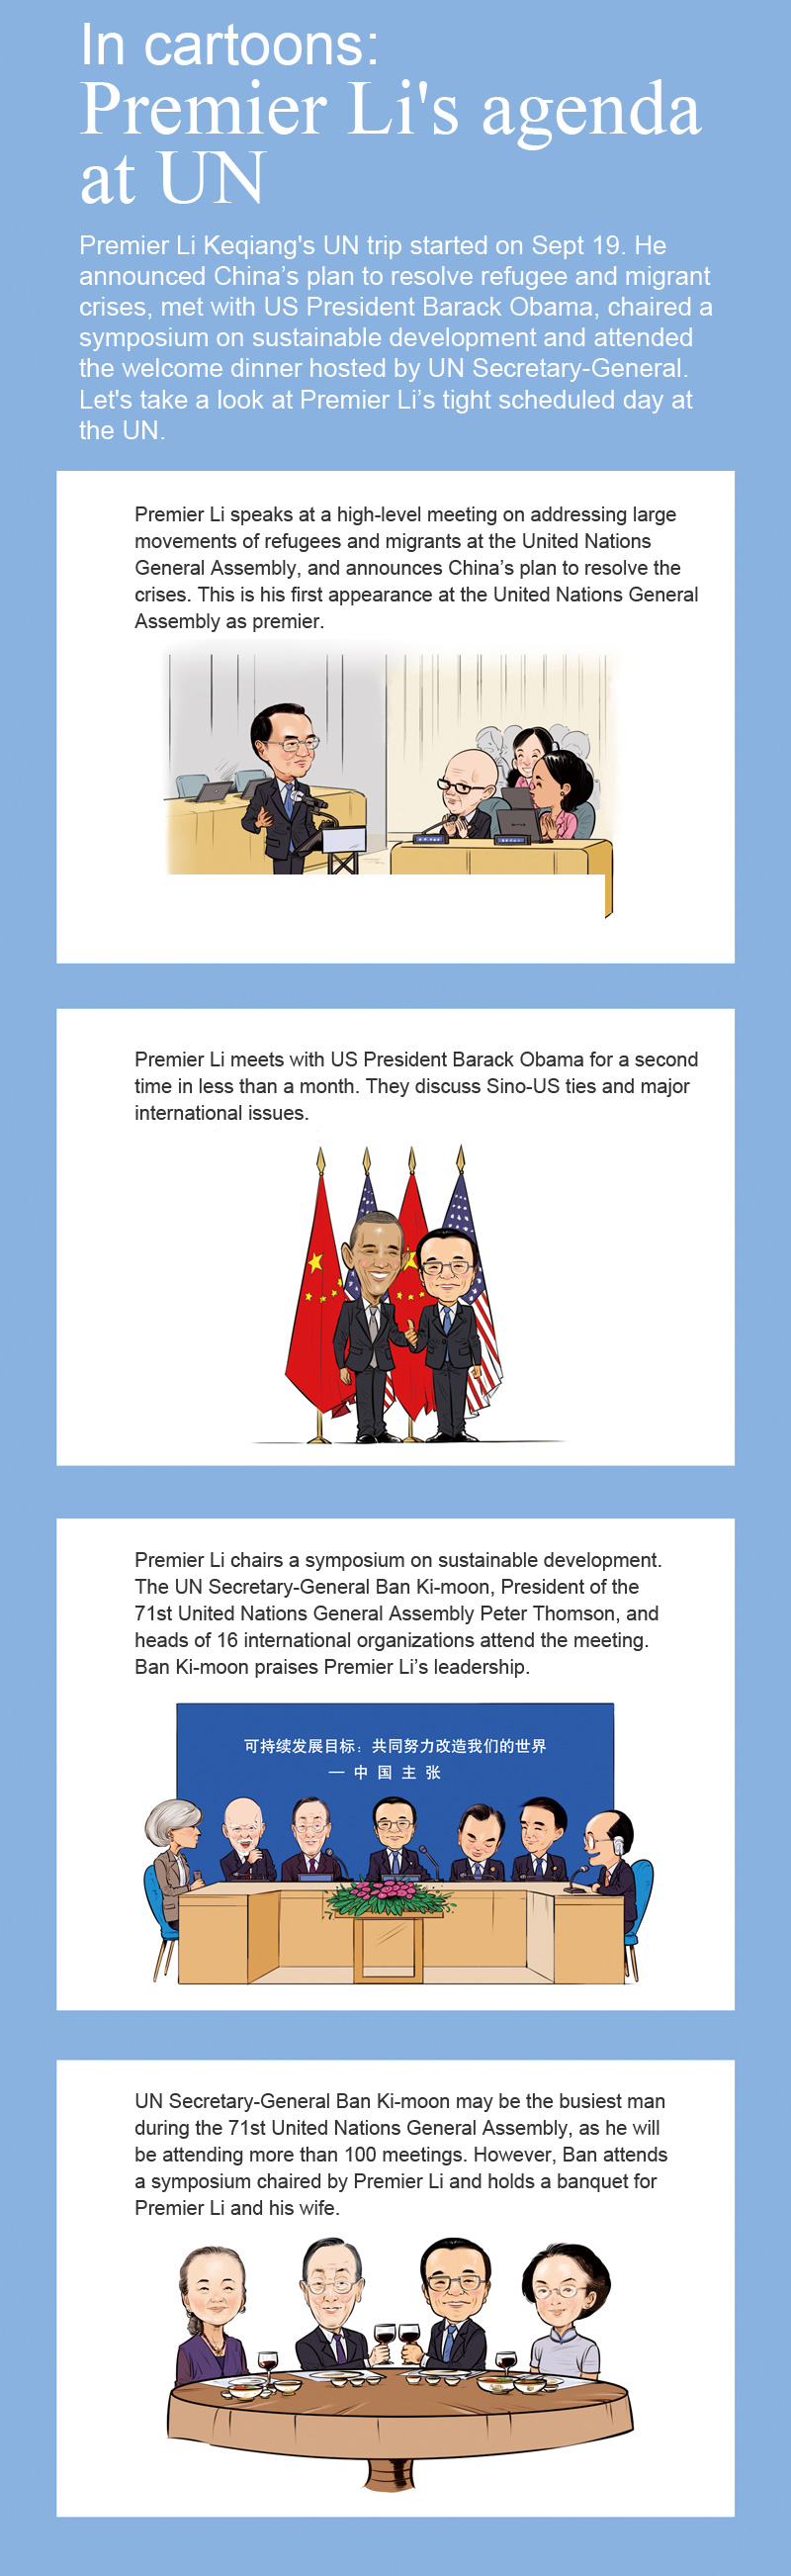 In cartoons: Premier Li's agenda at UN